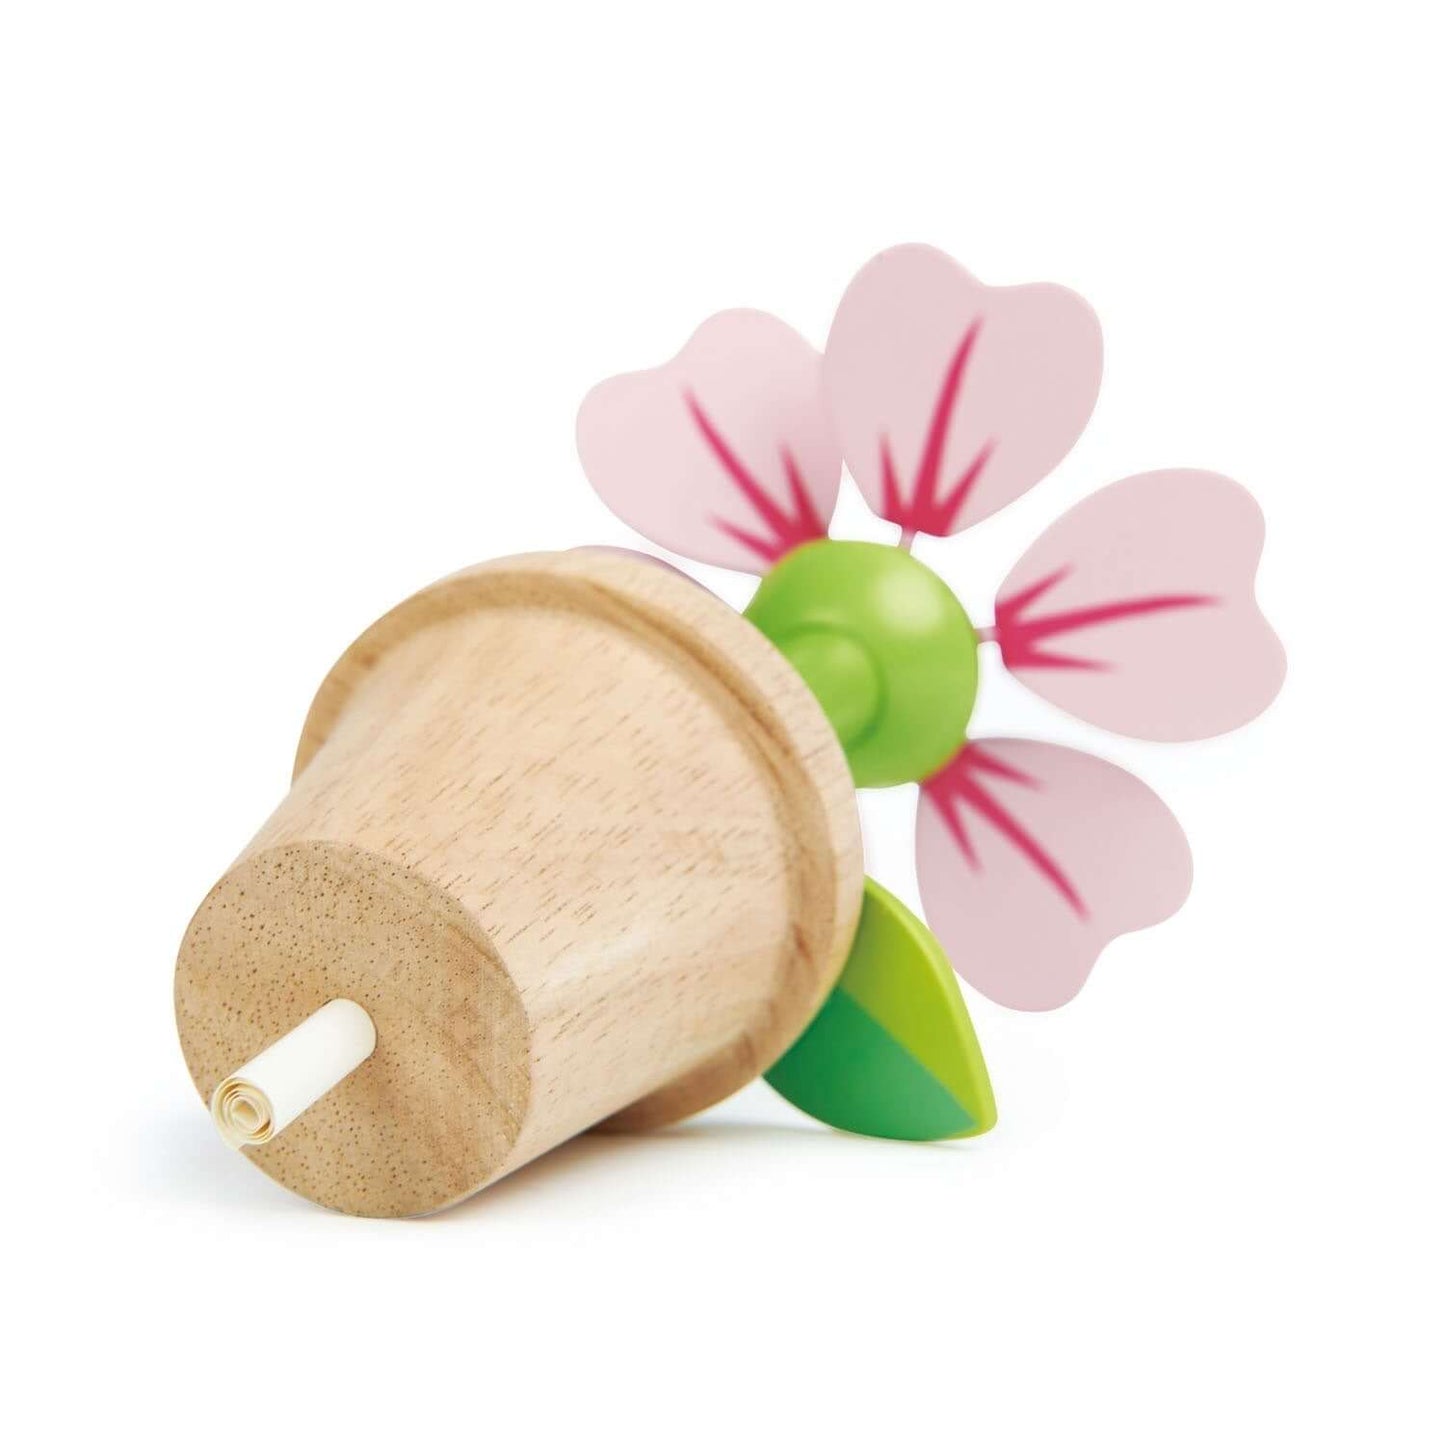 Blossom Flowerpot, Tender Leaf Toys, eco-friendly Toys, Mountain Kids Toys